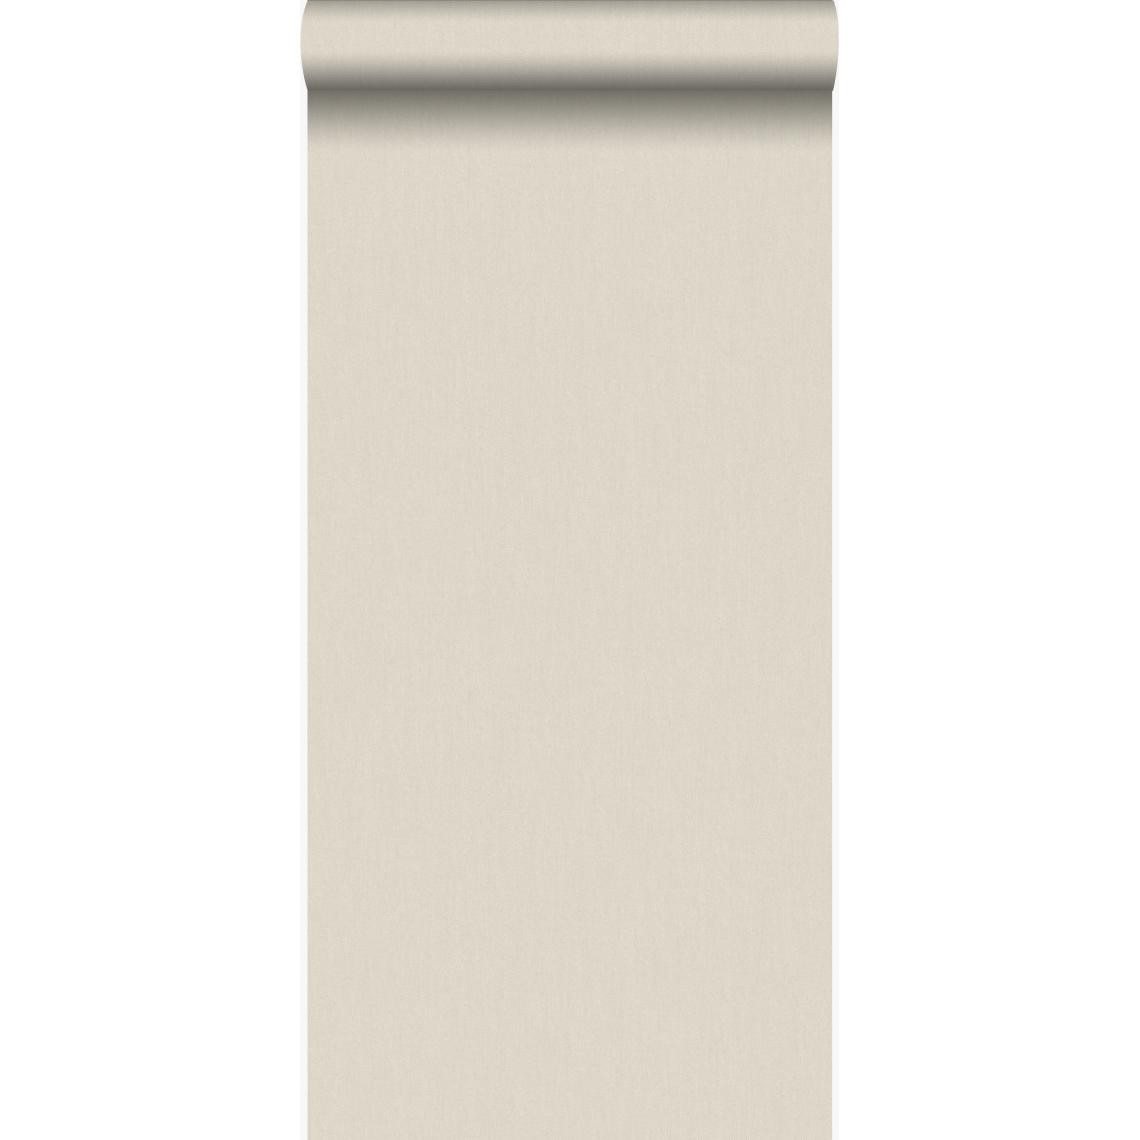 Origin - Origin papier peint lin beige vanille - 347006 - 53 cm x 10,05 m - Papier peint